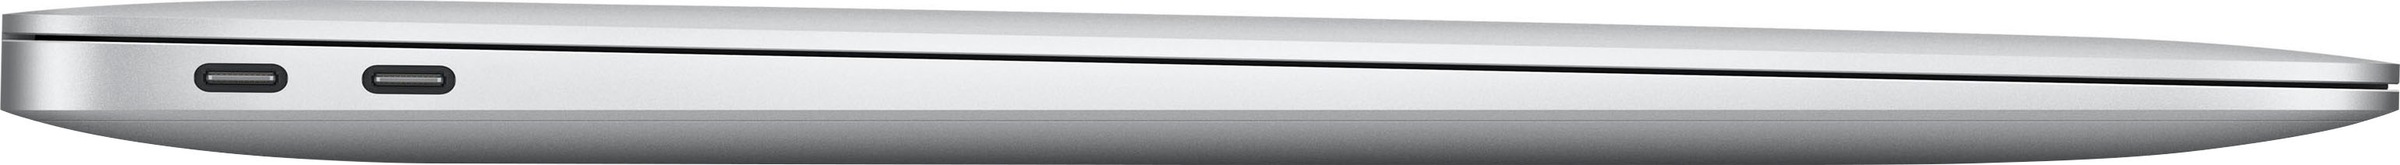 Apple Notebook »MacBook Air«, 33,78 cm, / 13,3 Zoll, Apple, M1, M1, 256 GB SSD, 8-core CPU, CTO